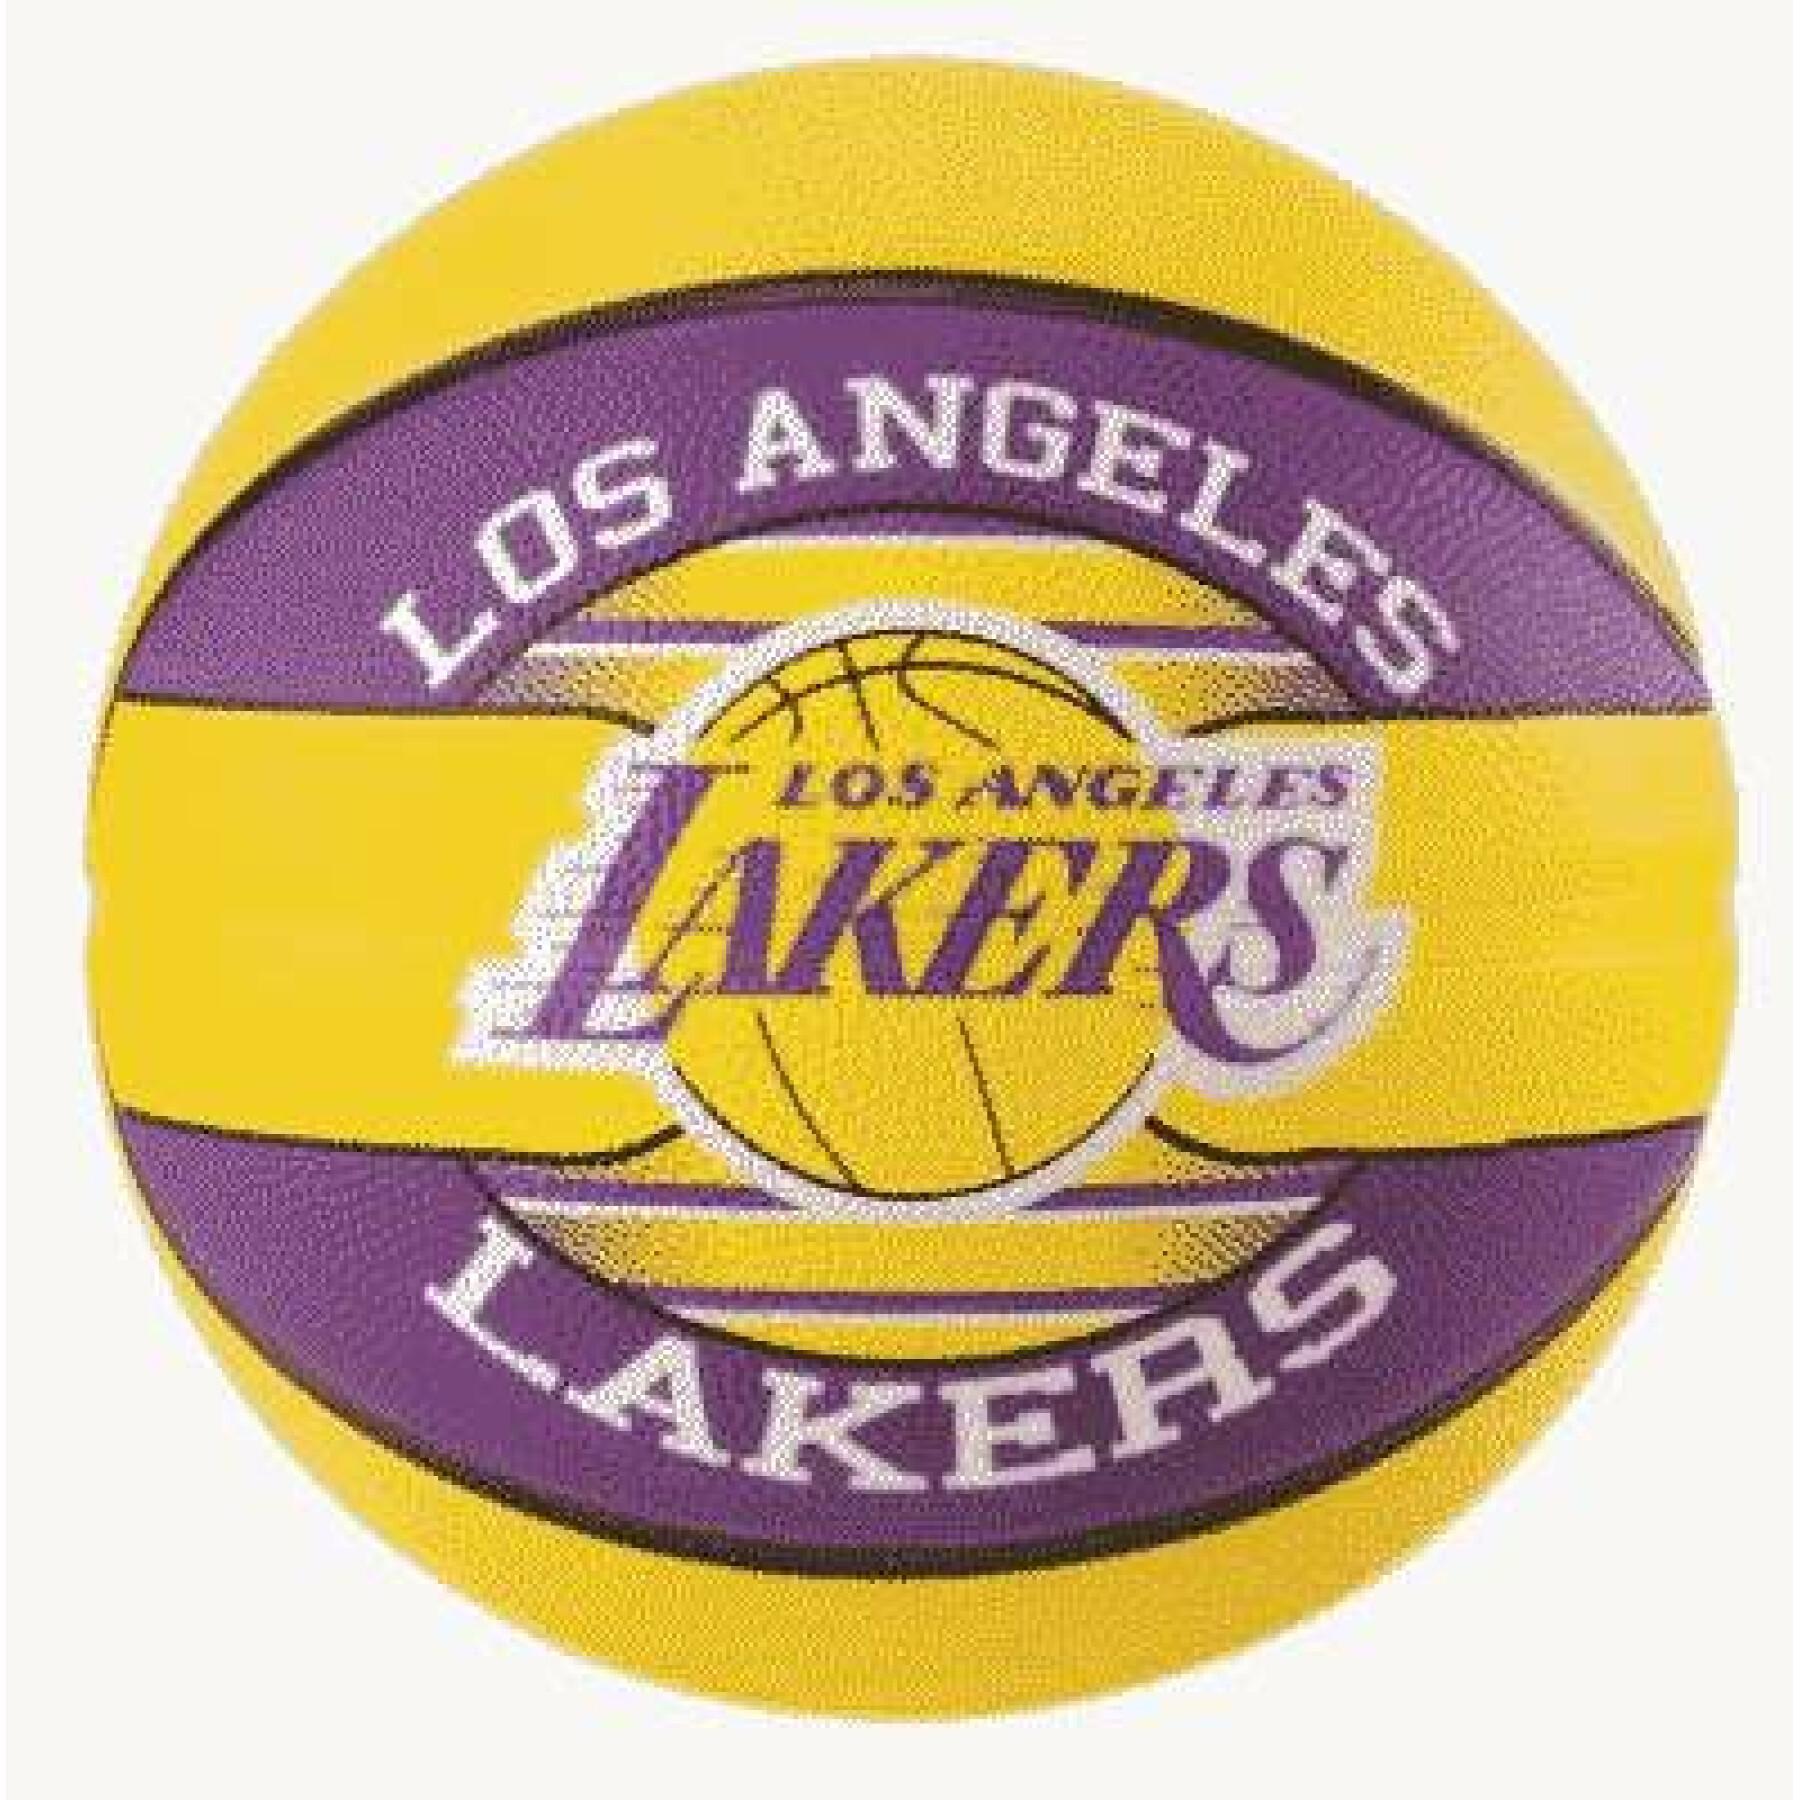 Koszykówka Spalding Los Angles Lakers